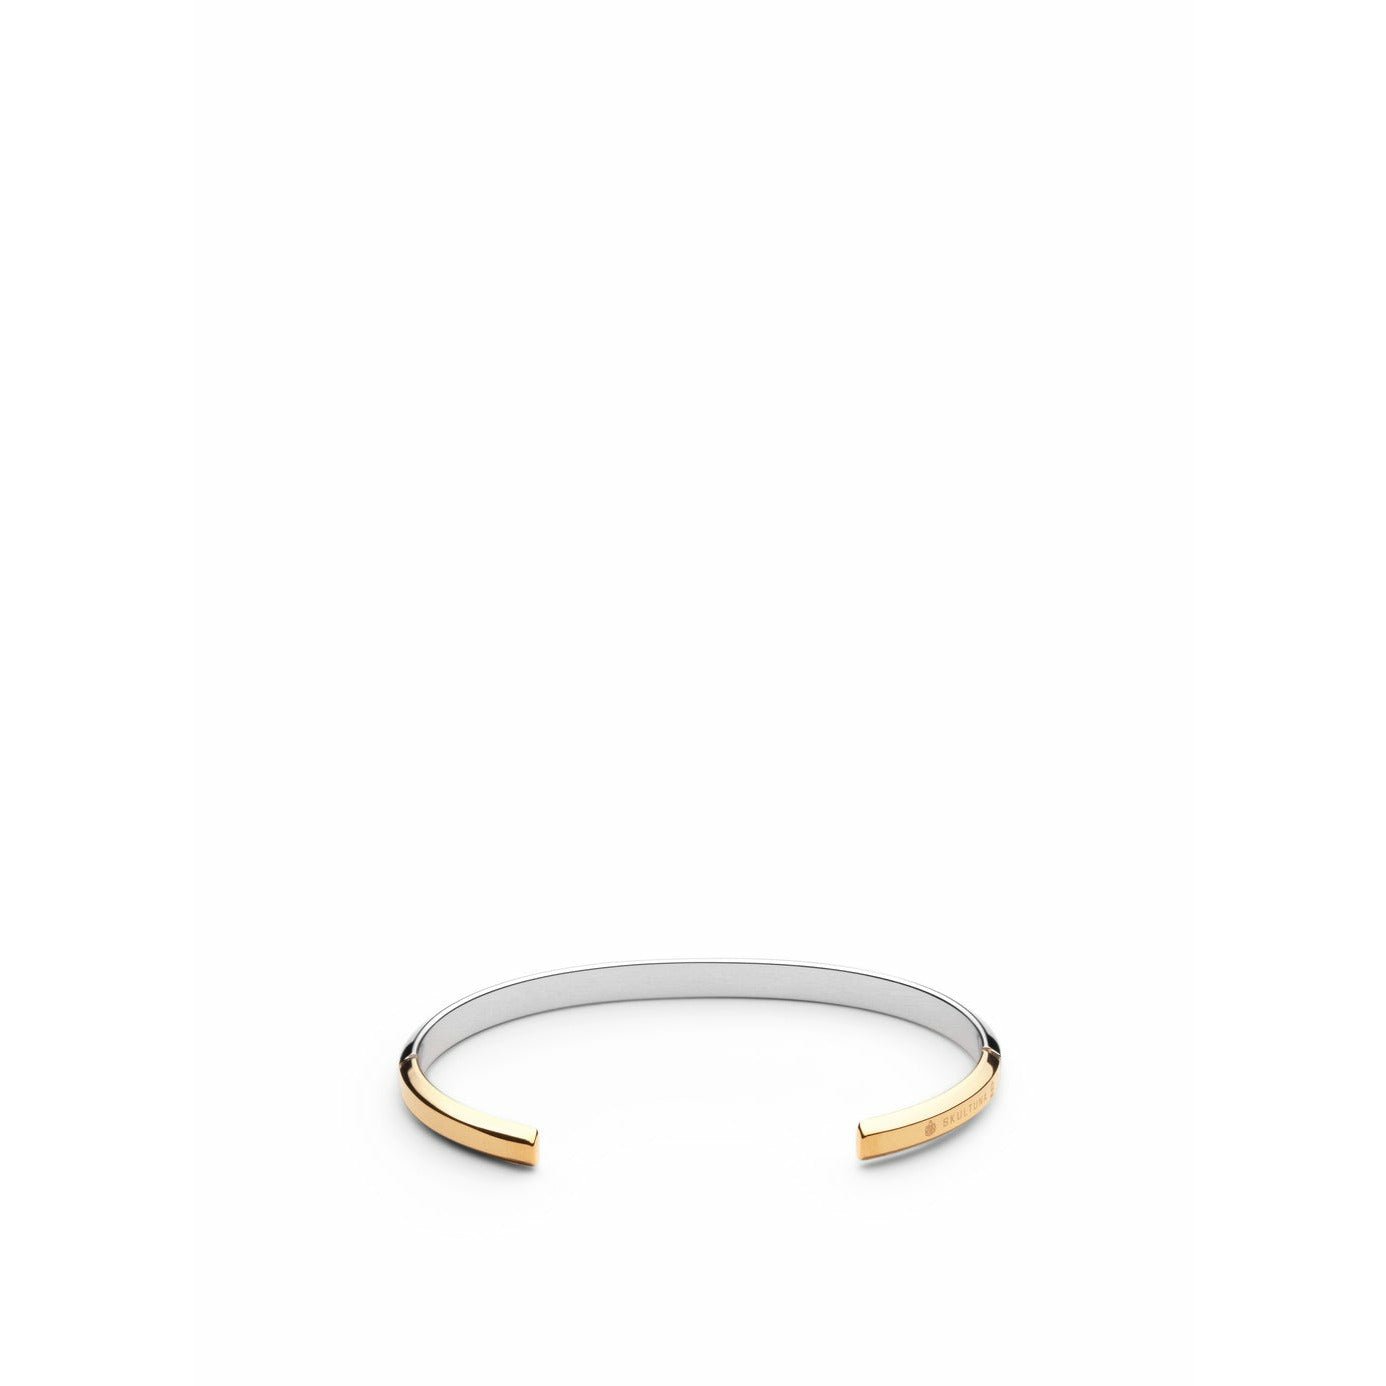 Skultuna Icône bracelet mince en acier poli / or plaqué, Ø14,5 cm